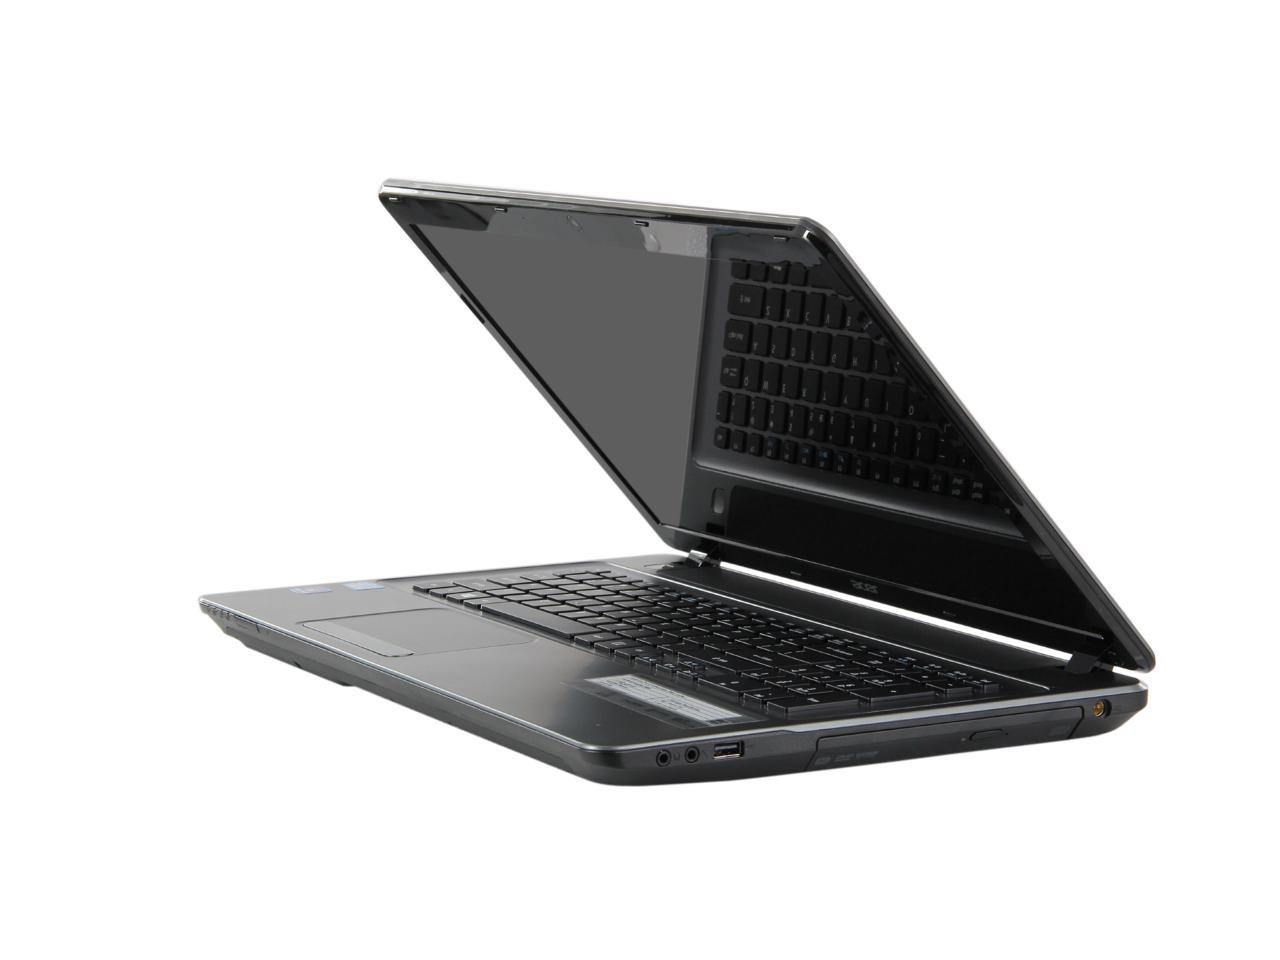 500GB SATA Serial ATA Internal Hard Drive for the Acer Aspire 5110 Notebook/Laptop